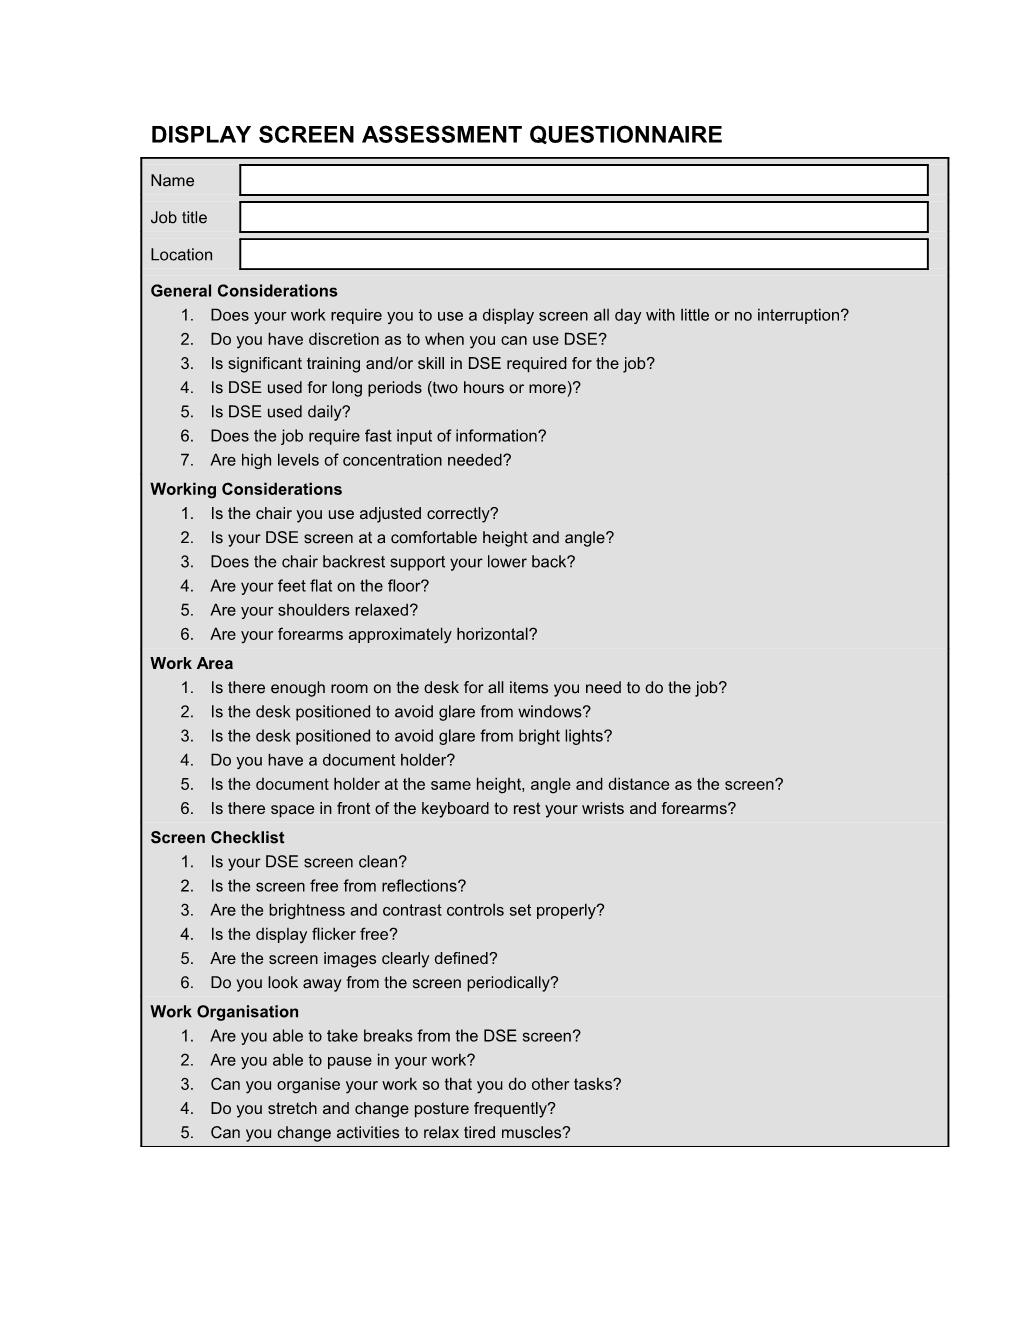 Display Screen Assessment Questionnaire